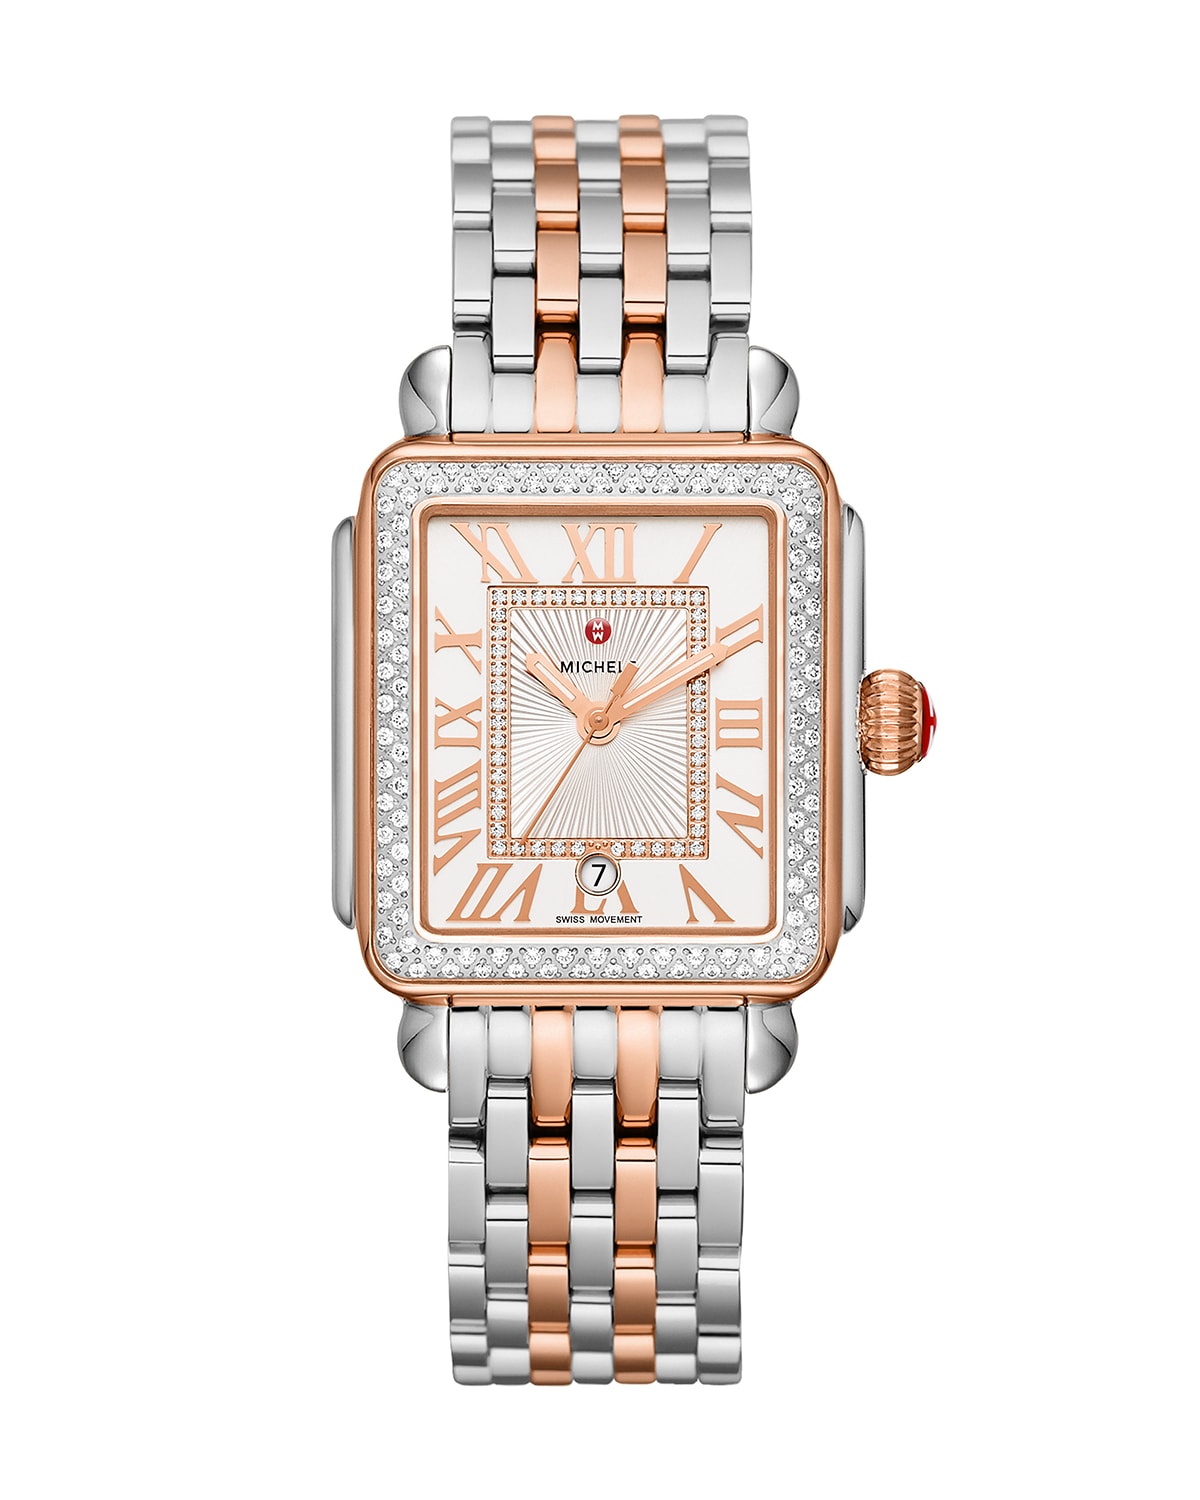 Deco Madison Two-Tone 18K Pink Gold Diamond Watch